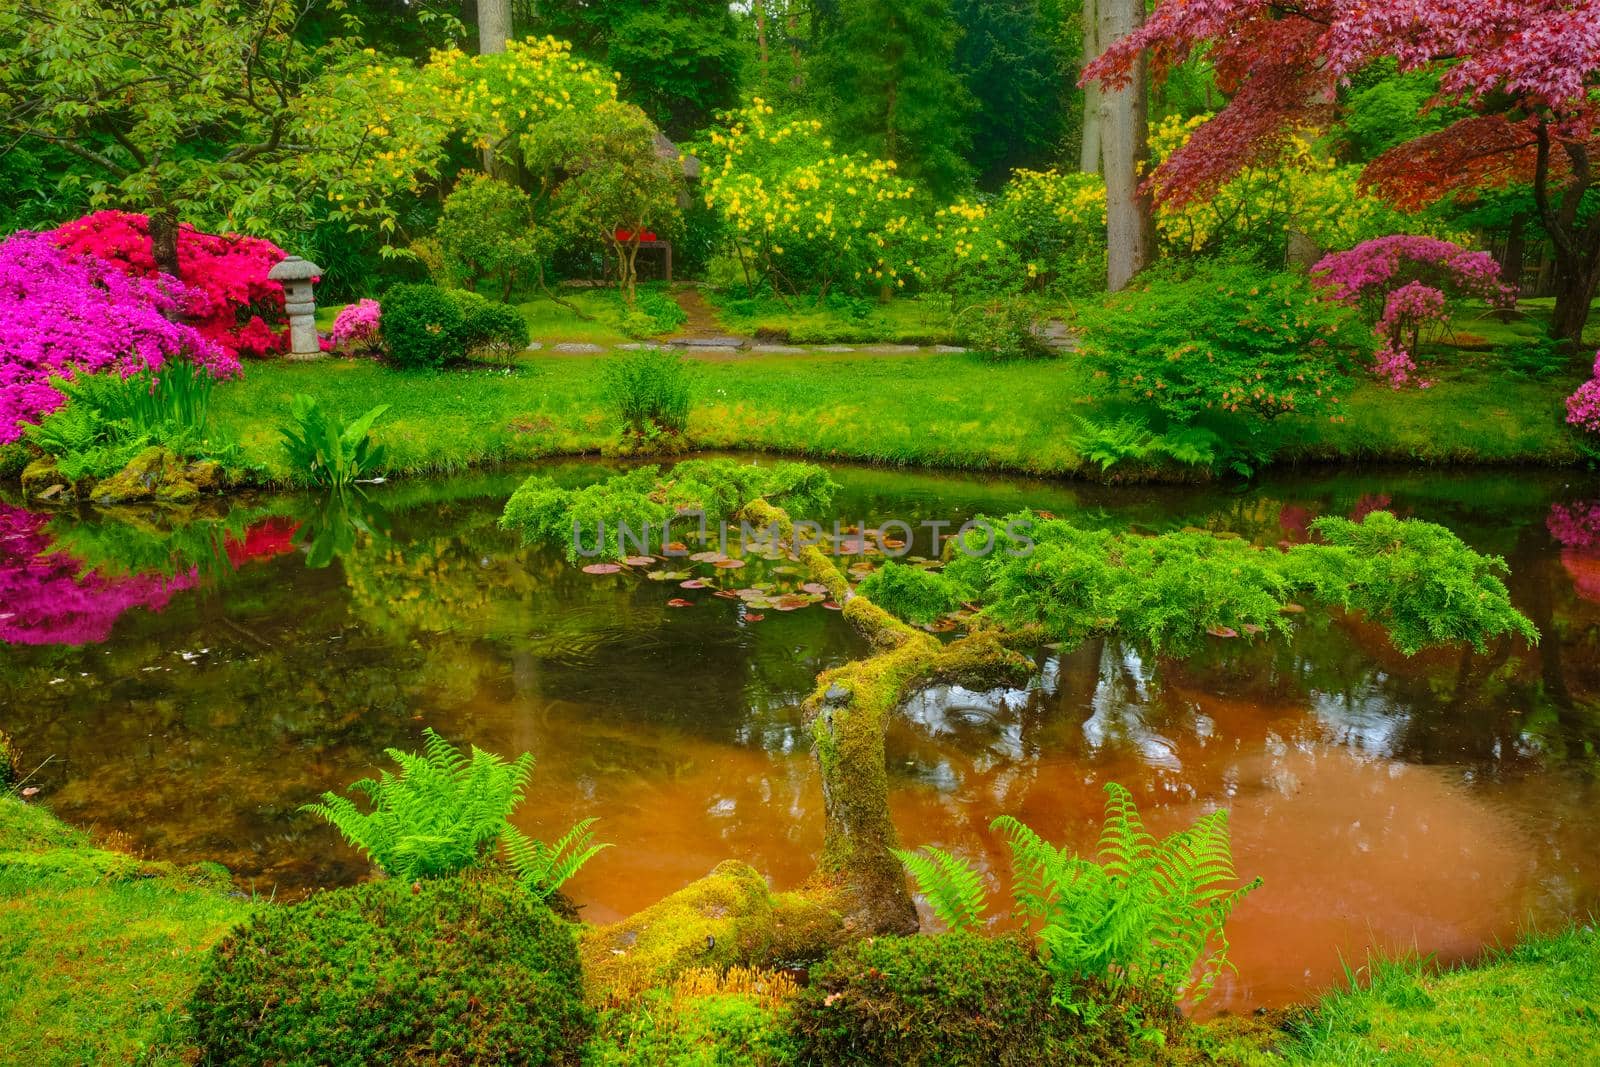 Japanese garden, Park Clingendael, The Hague, Netherlands by dimol